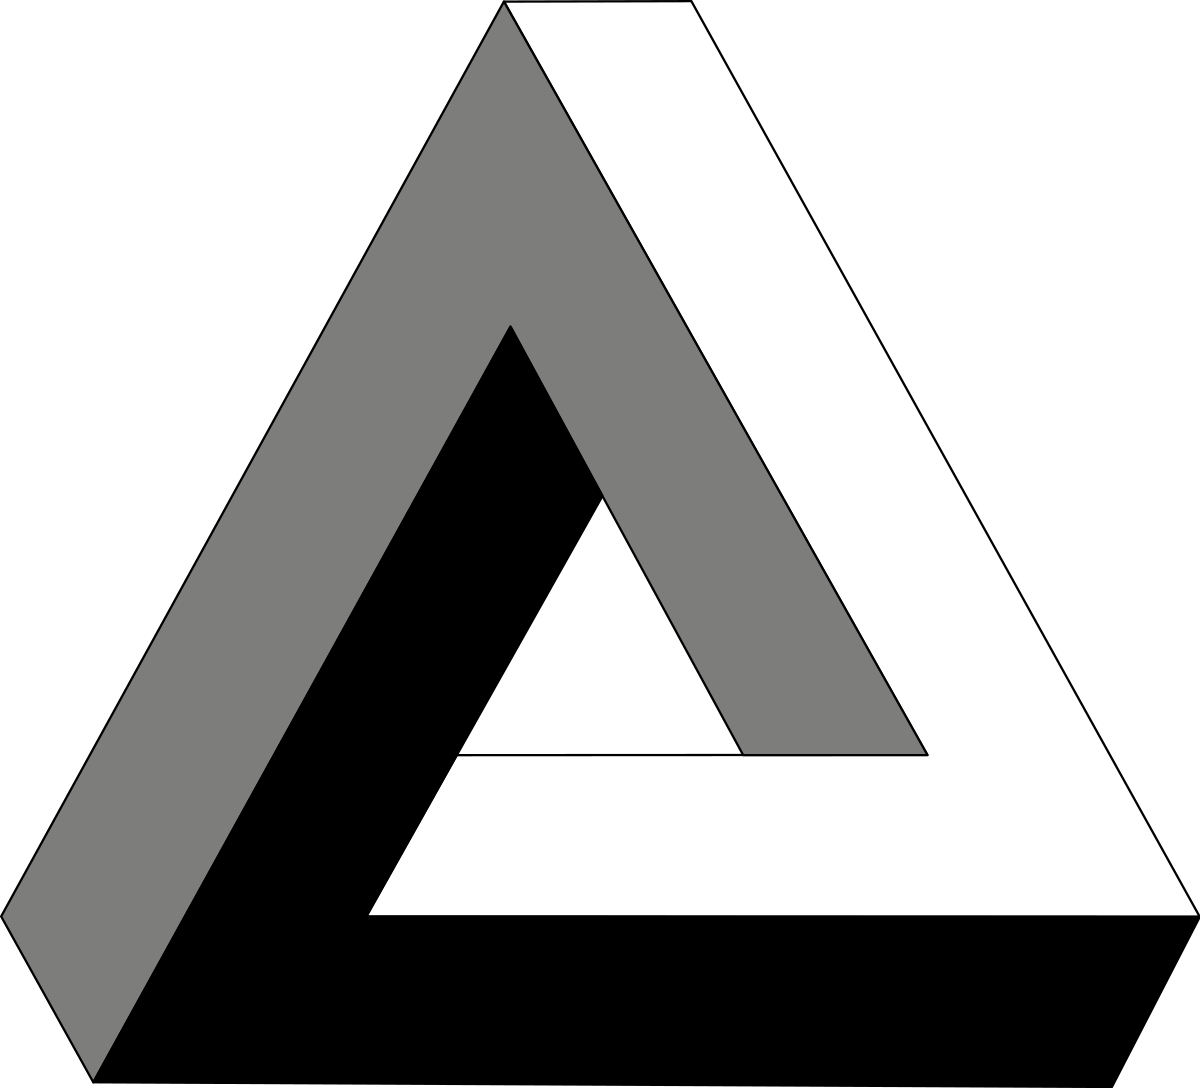 Black and White Triangles Logo - Penrose triangle